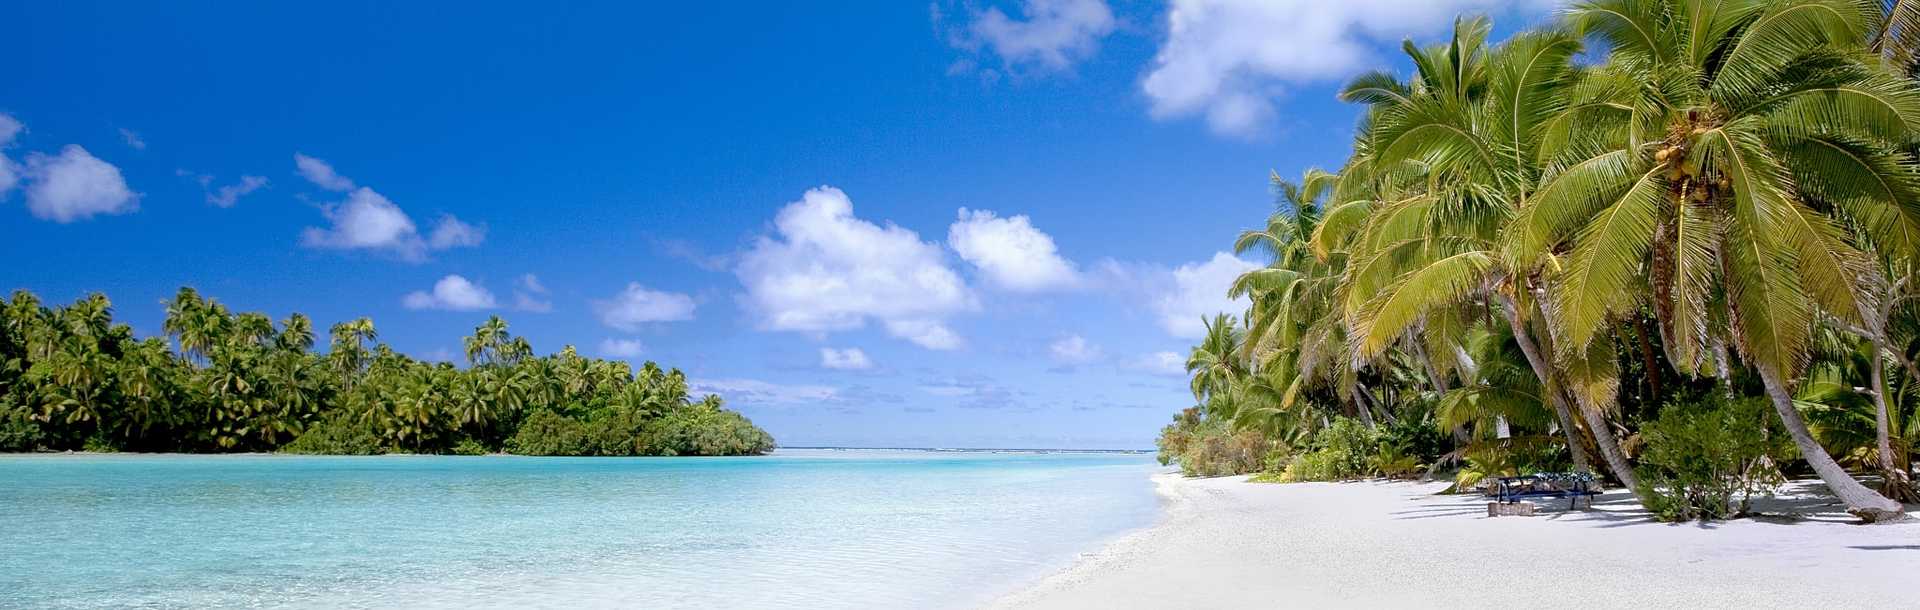 Beach on Cook Islands